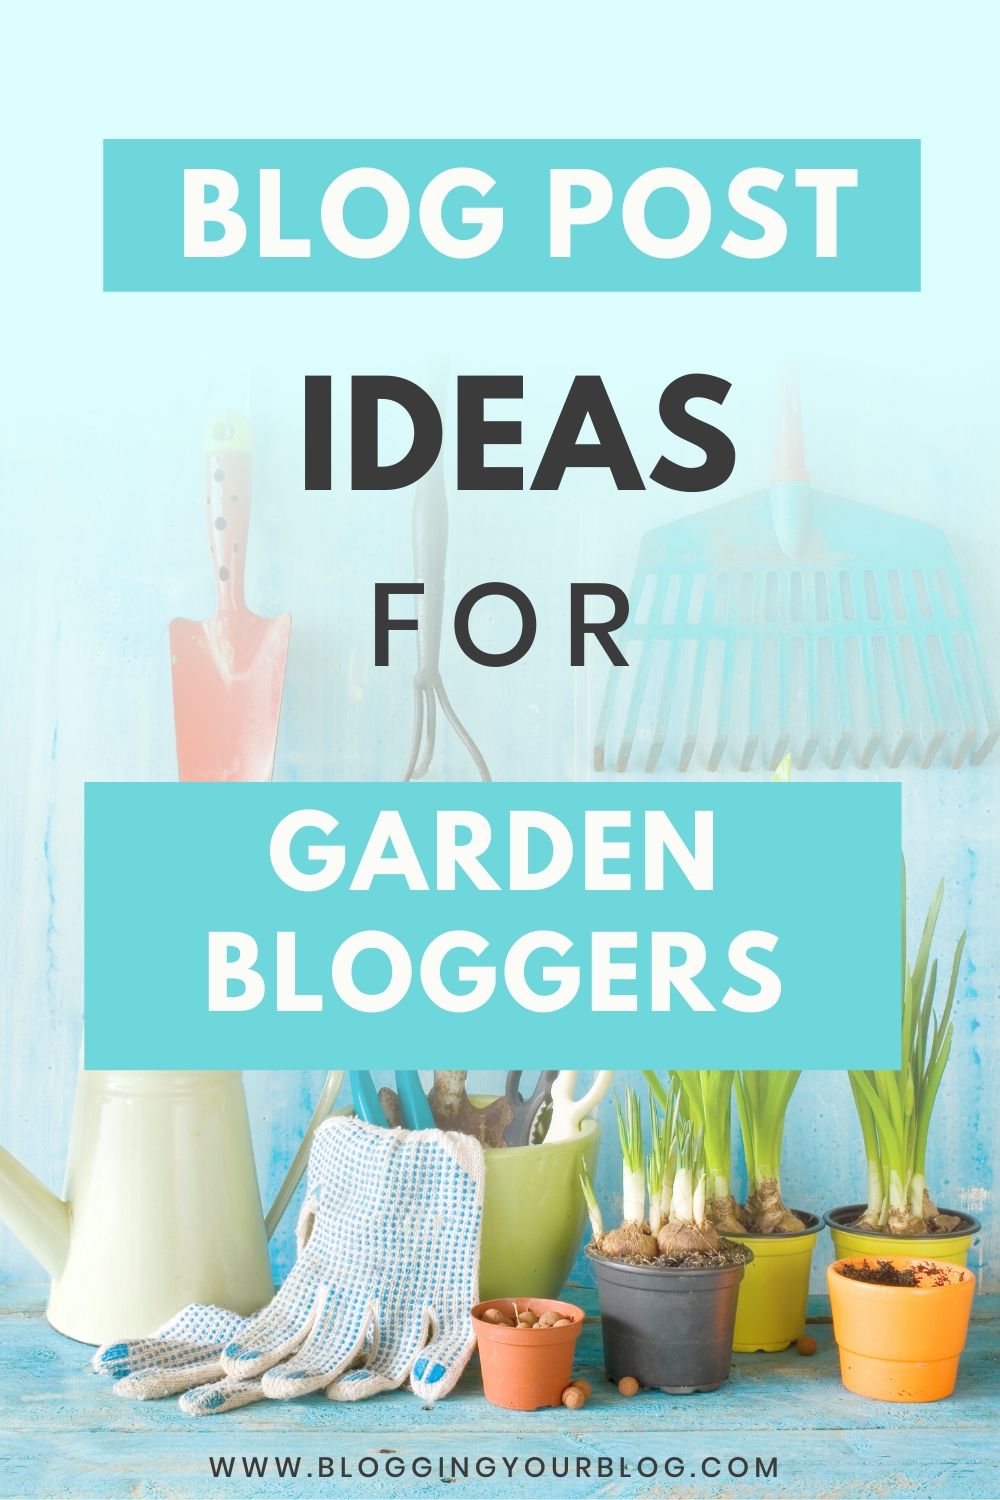 Over 80 Blog Post Ideas for Gardening Blogs Blogging Your Blog